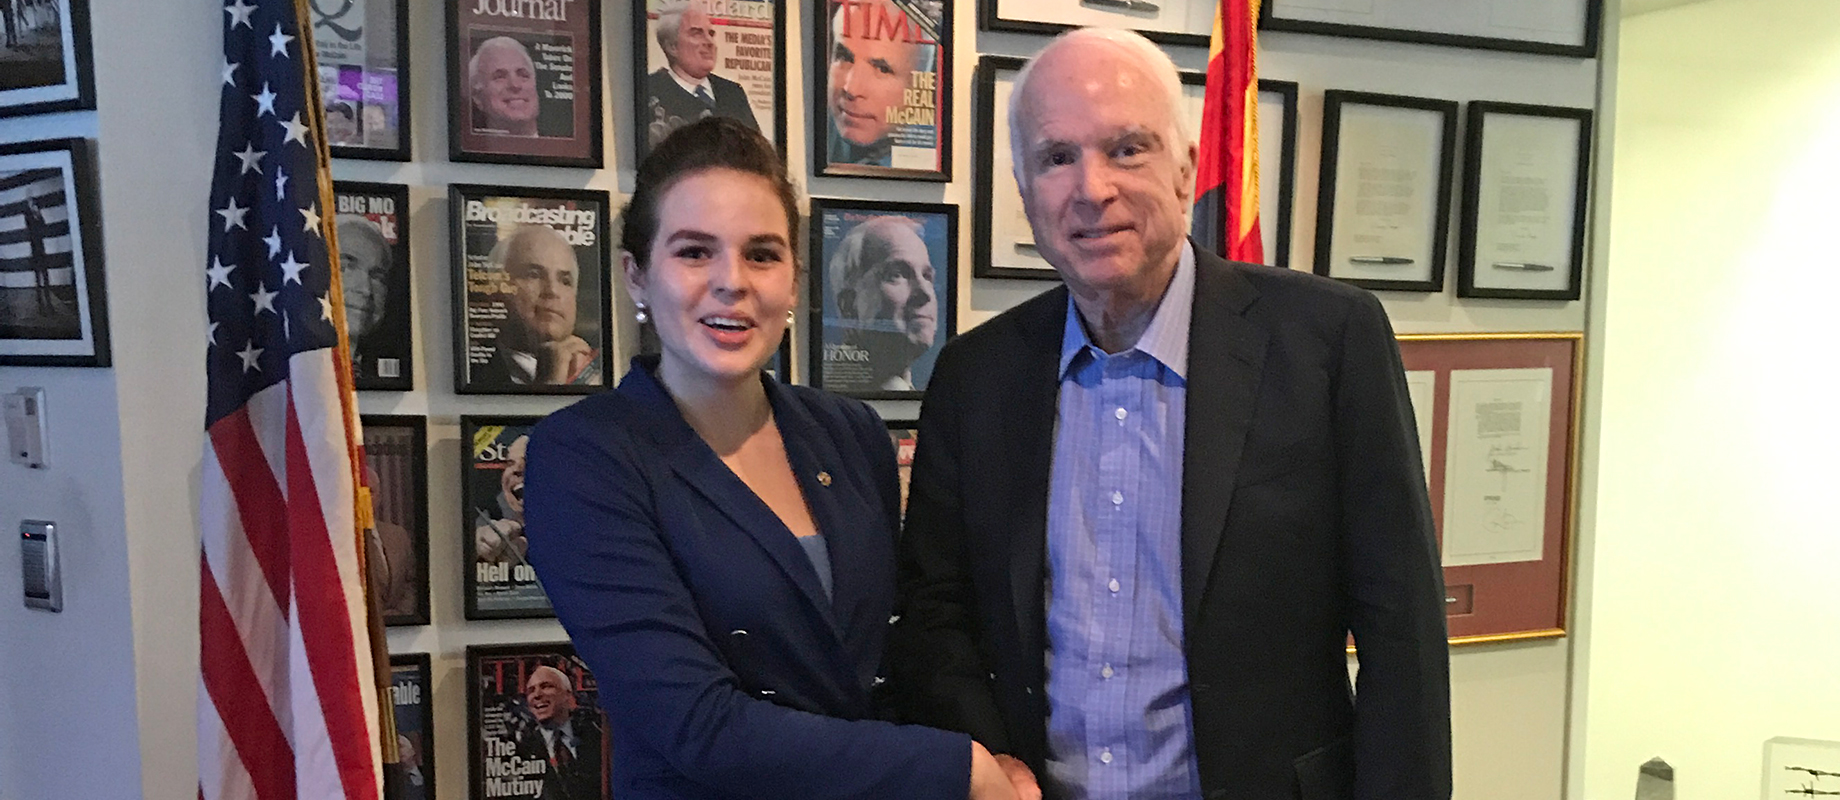 Simpson College graduate Erin Magoffie shakes hands with U.S. Senator John McCain